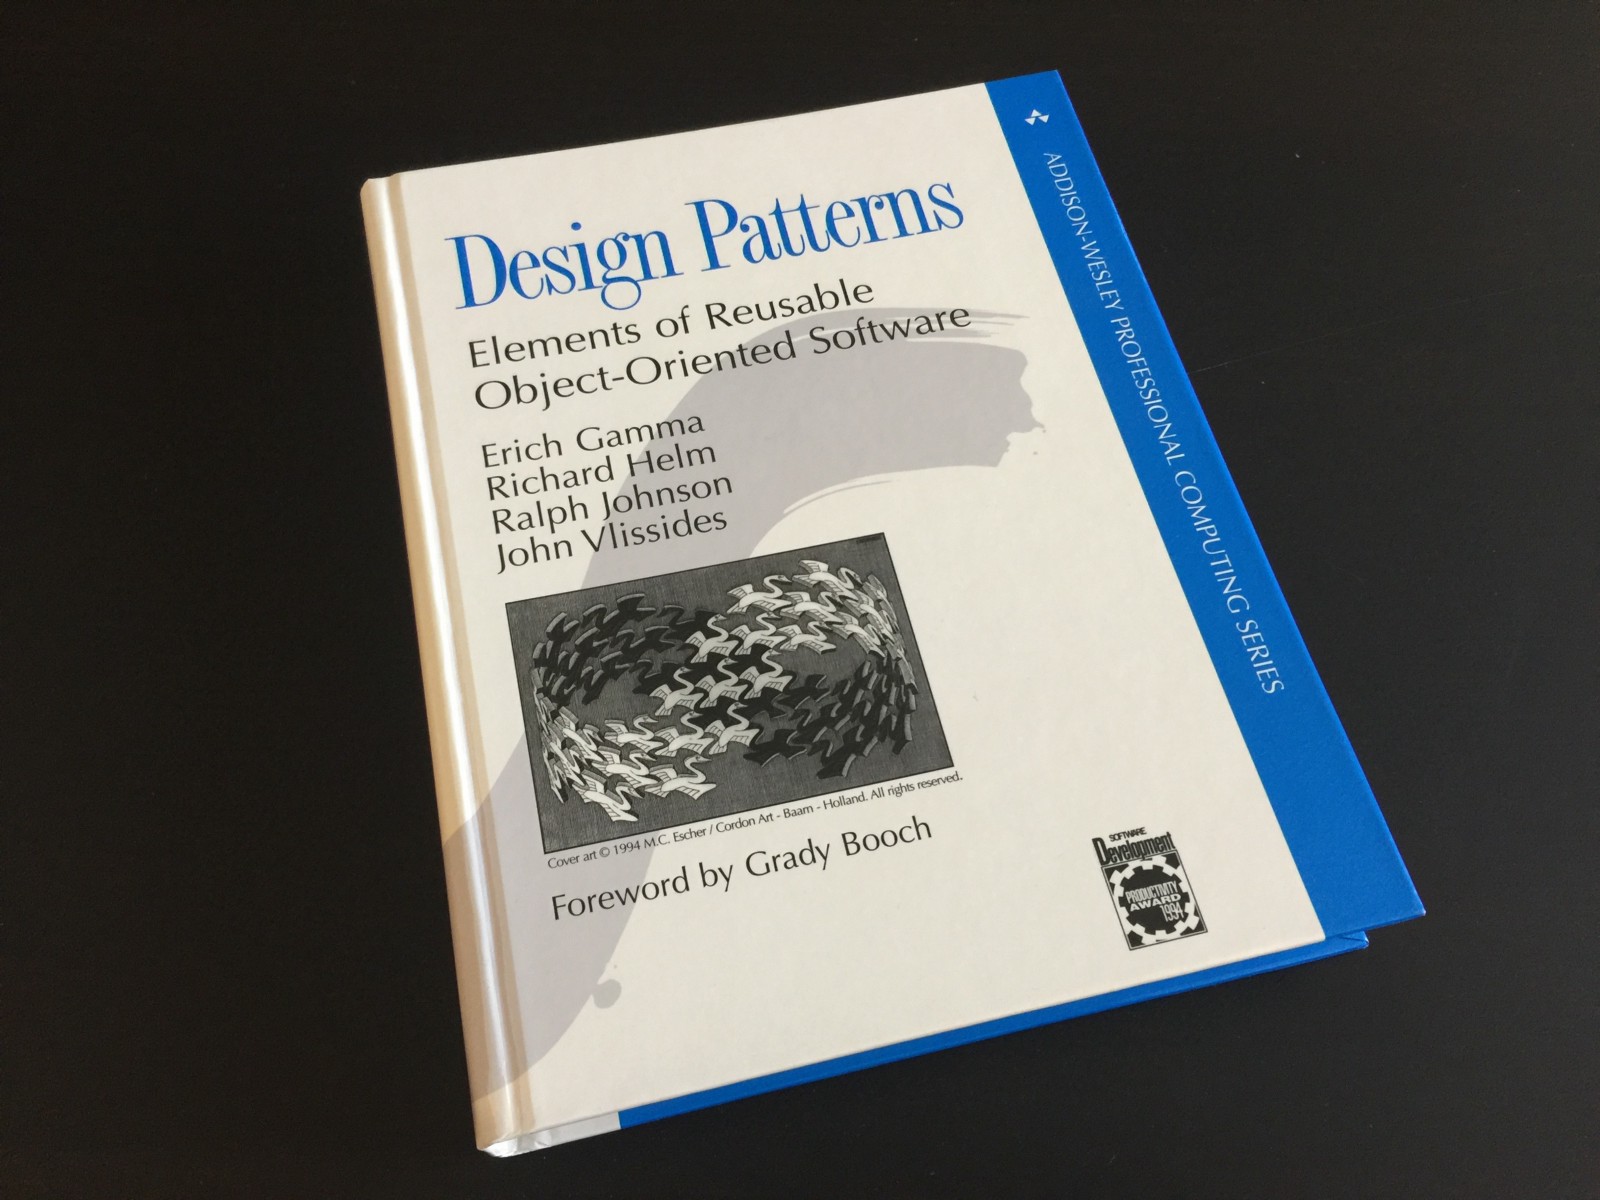 Photograph of Design Patterns book